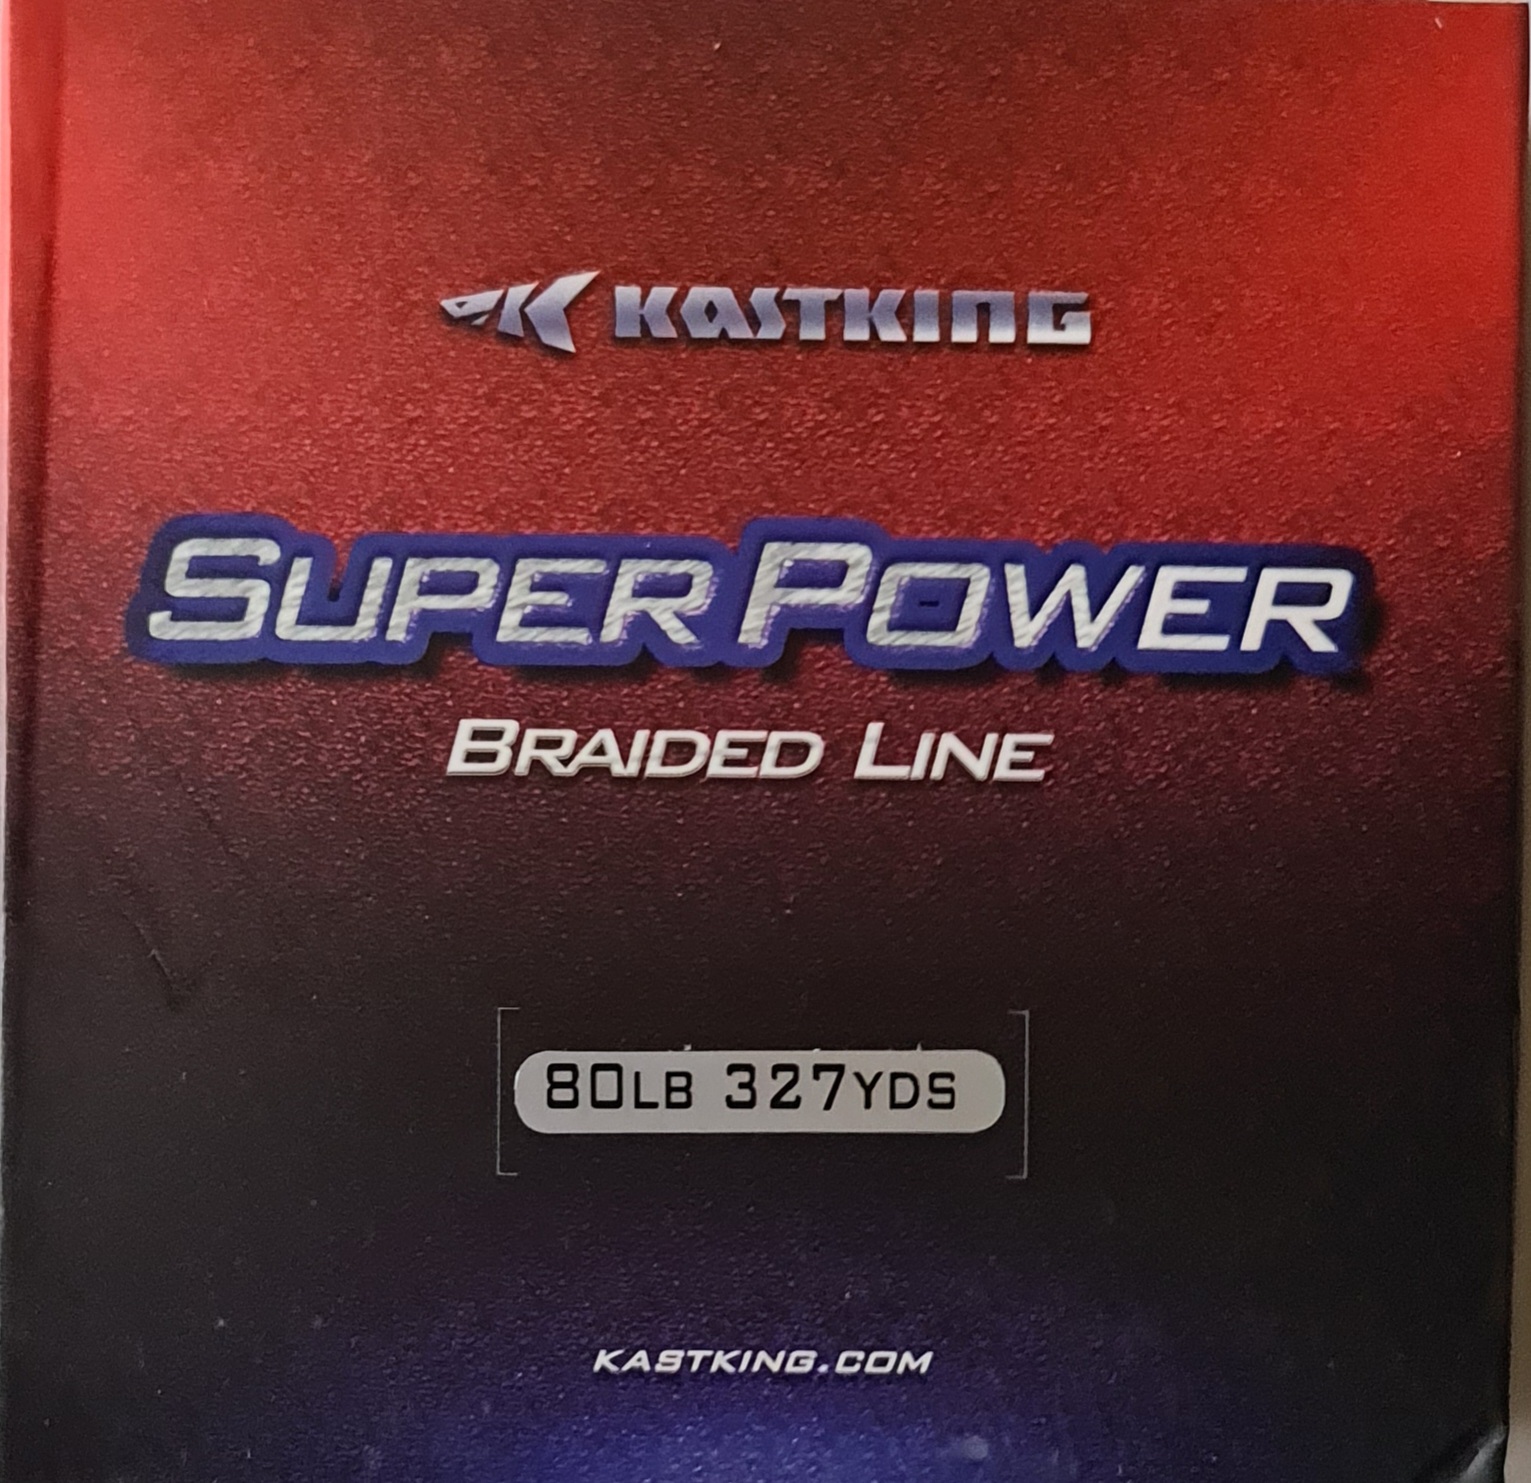 KastKing Super Power Braided Line 80lb 327yds